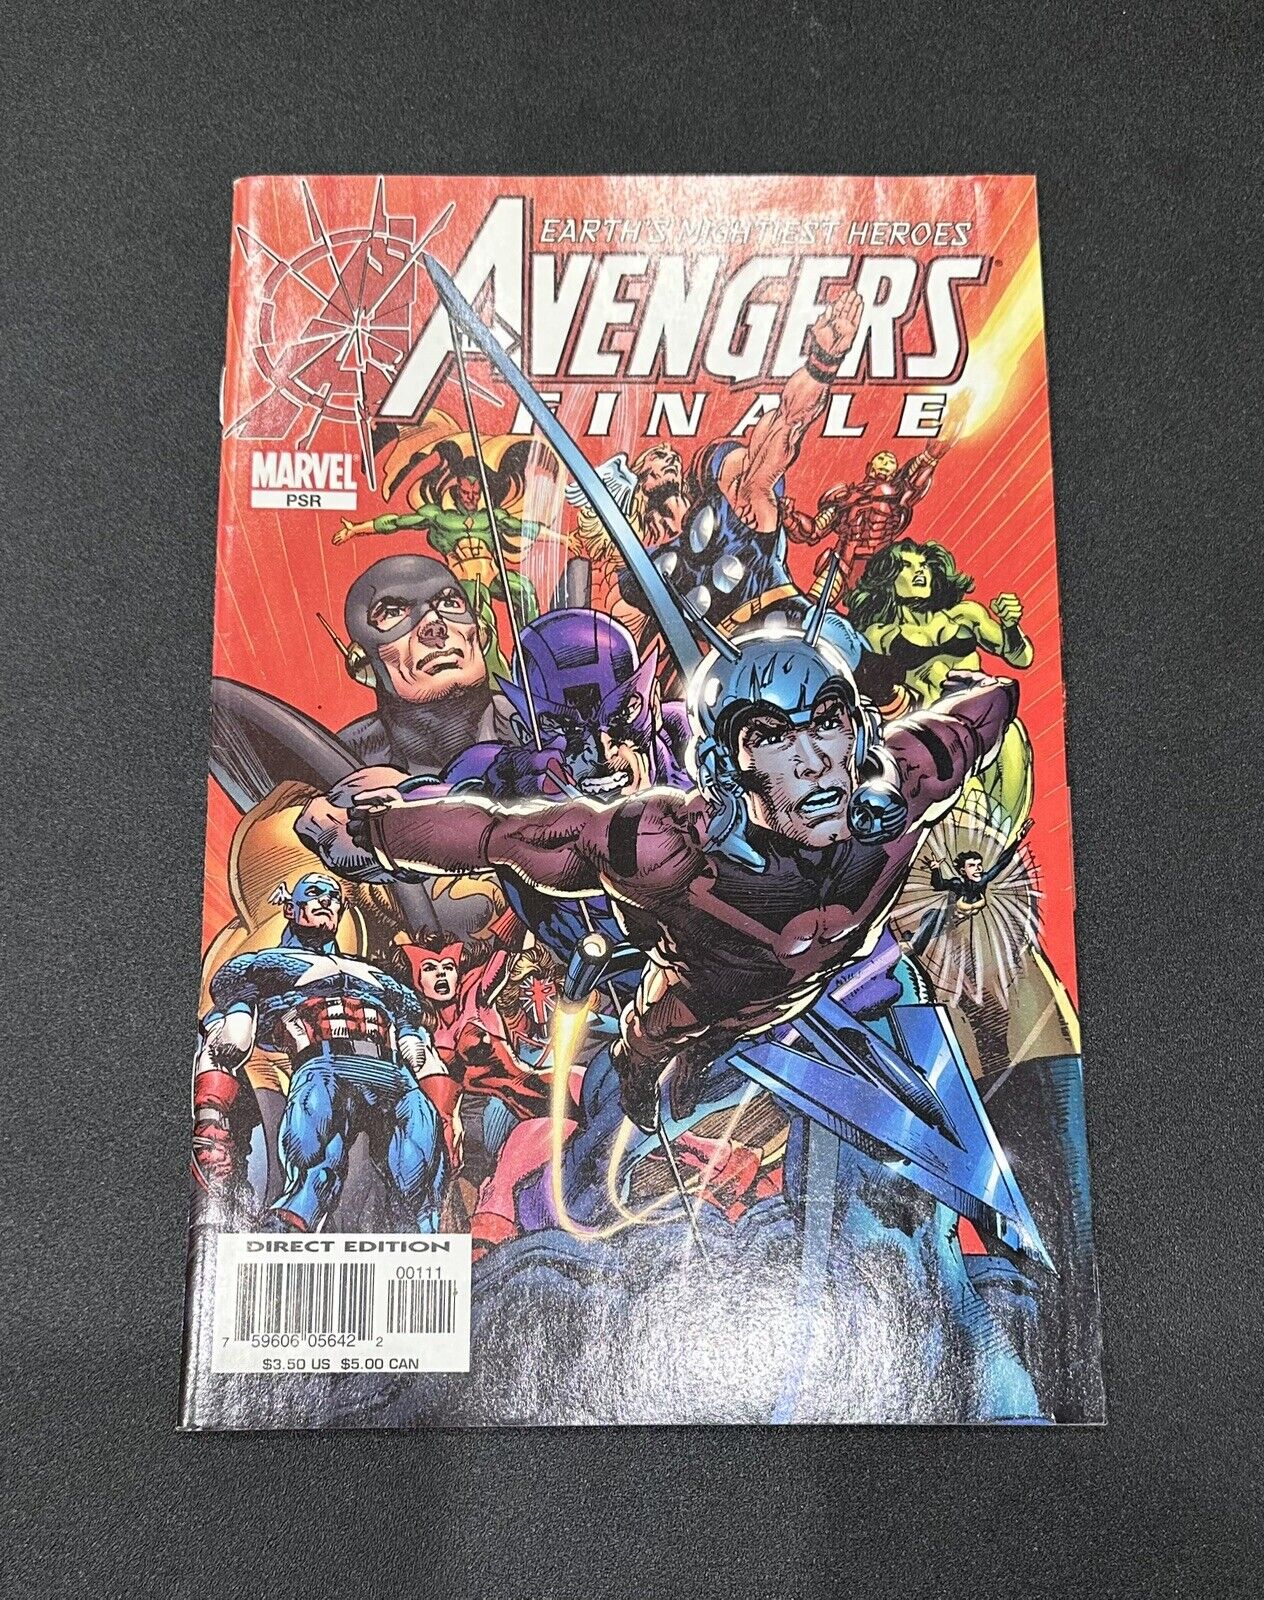 Avengers finale #1 PSR Marvel 2004 One- Shot Neal Adams Cover Art